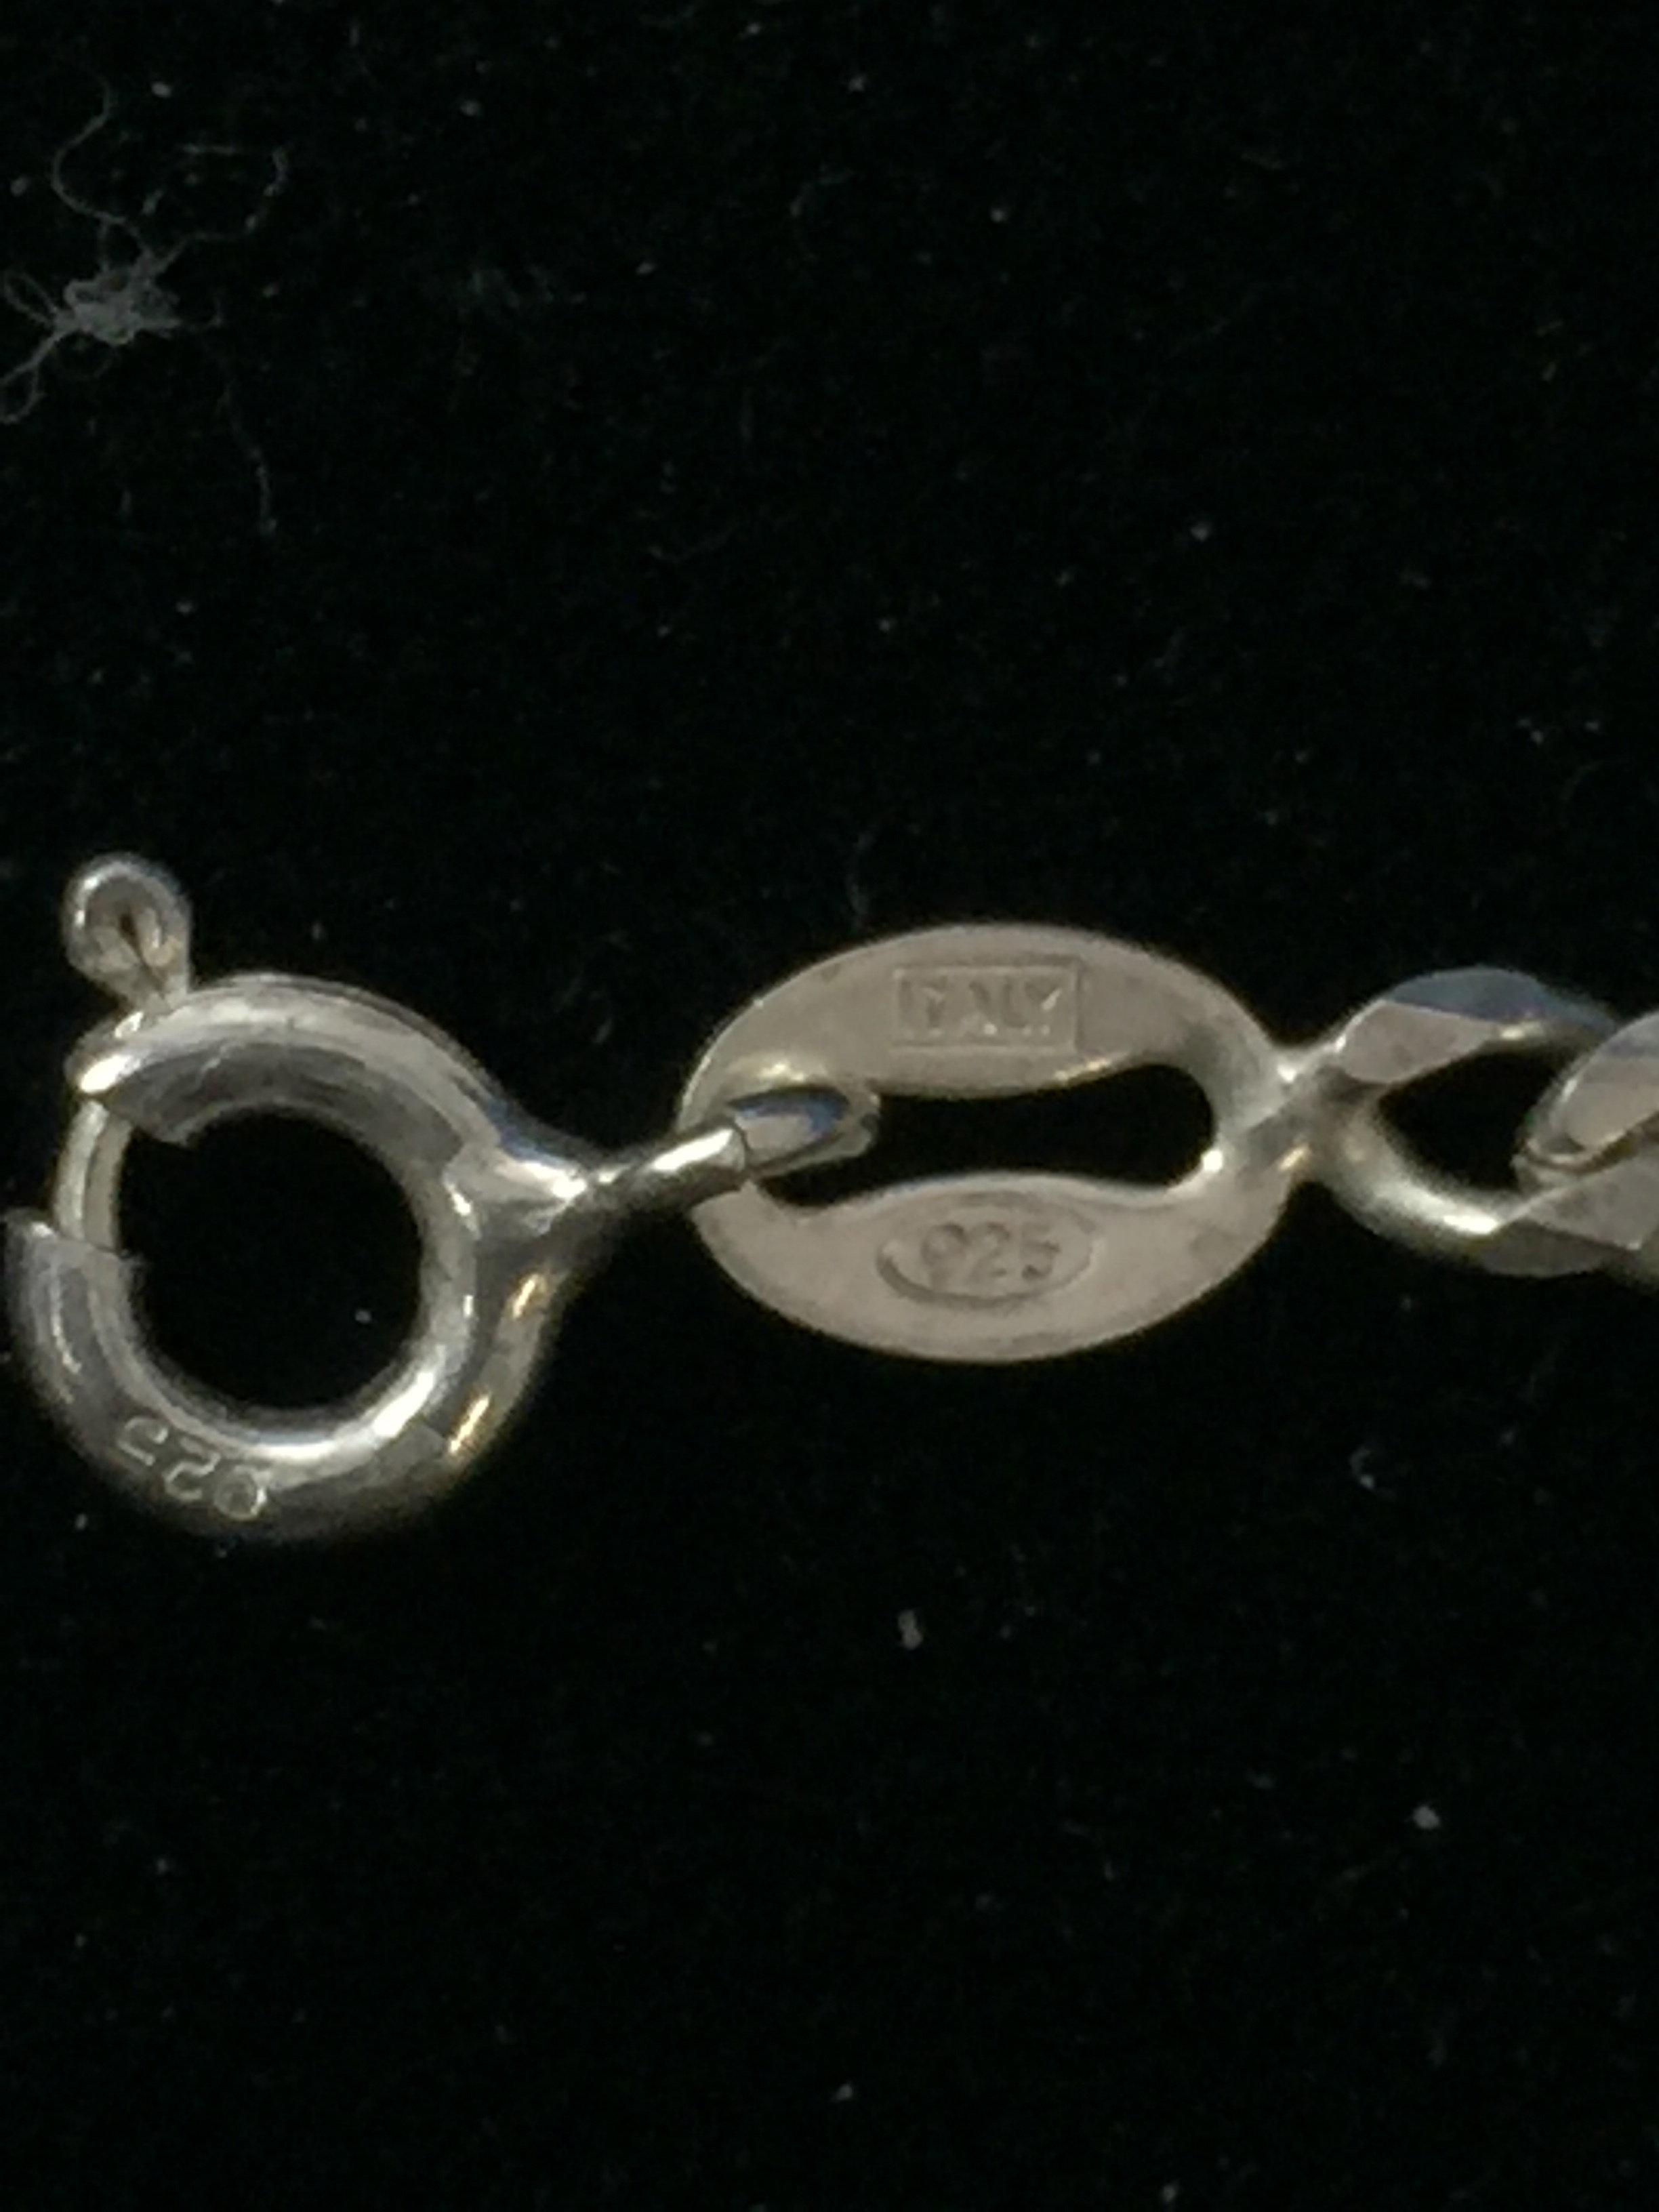 6" Sterling Silver Heart Bar Chain Bracelet